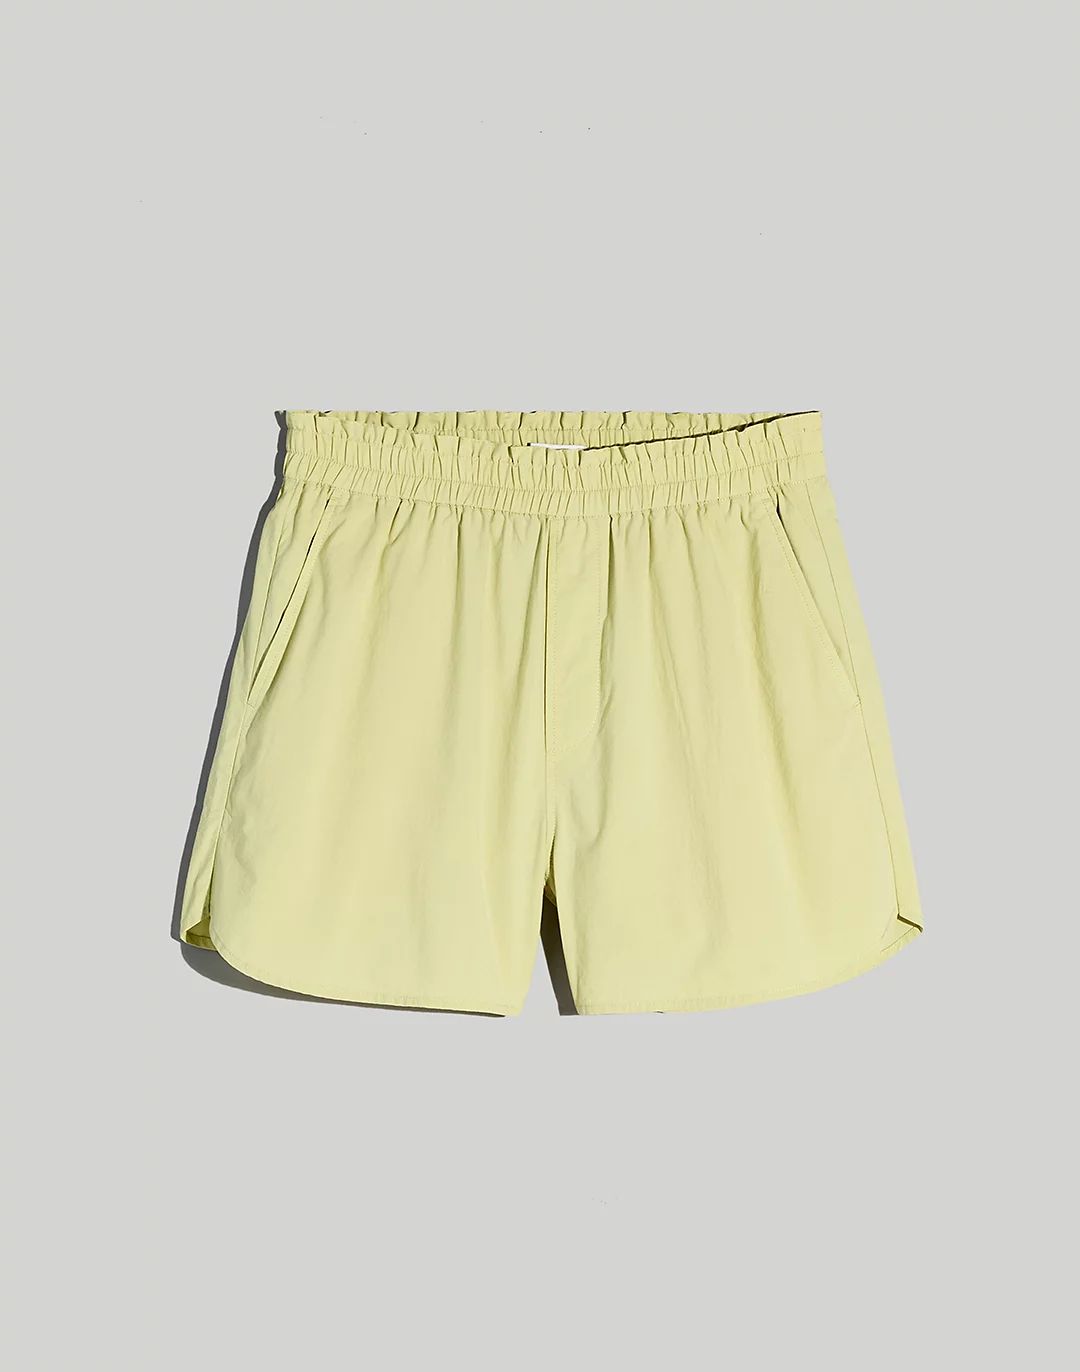 Pull-On Shorts in Signature Poplin | Madewell